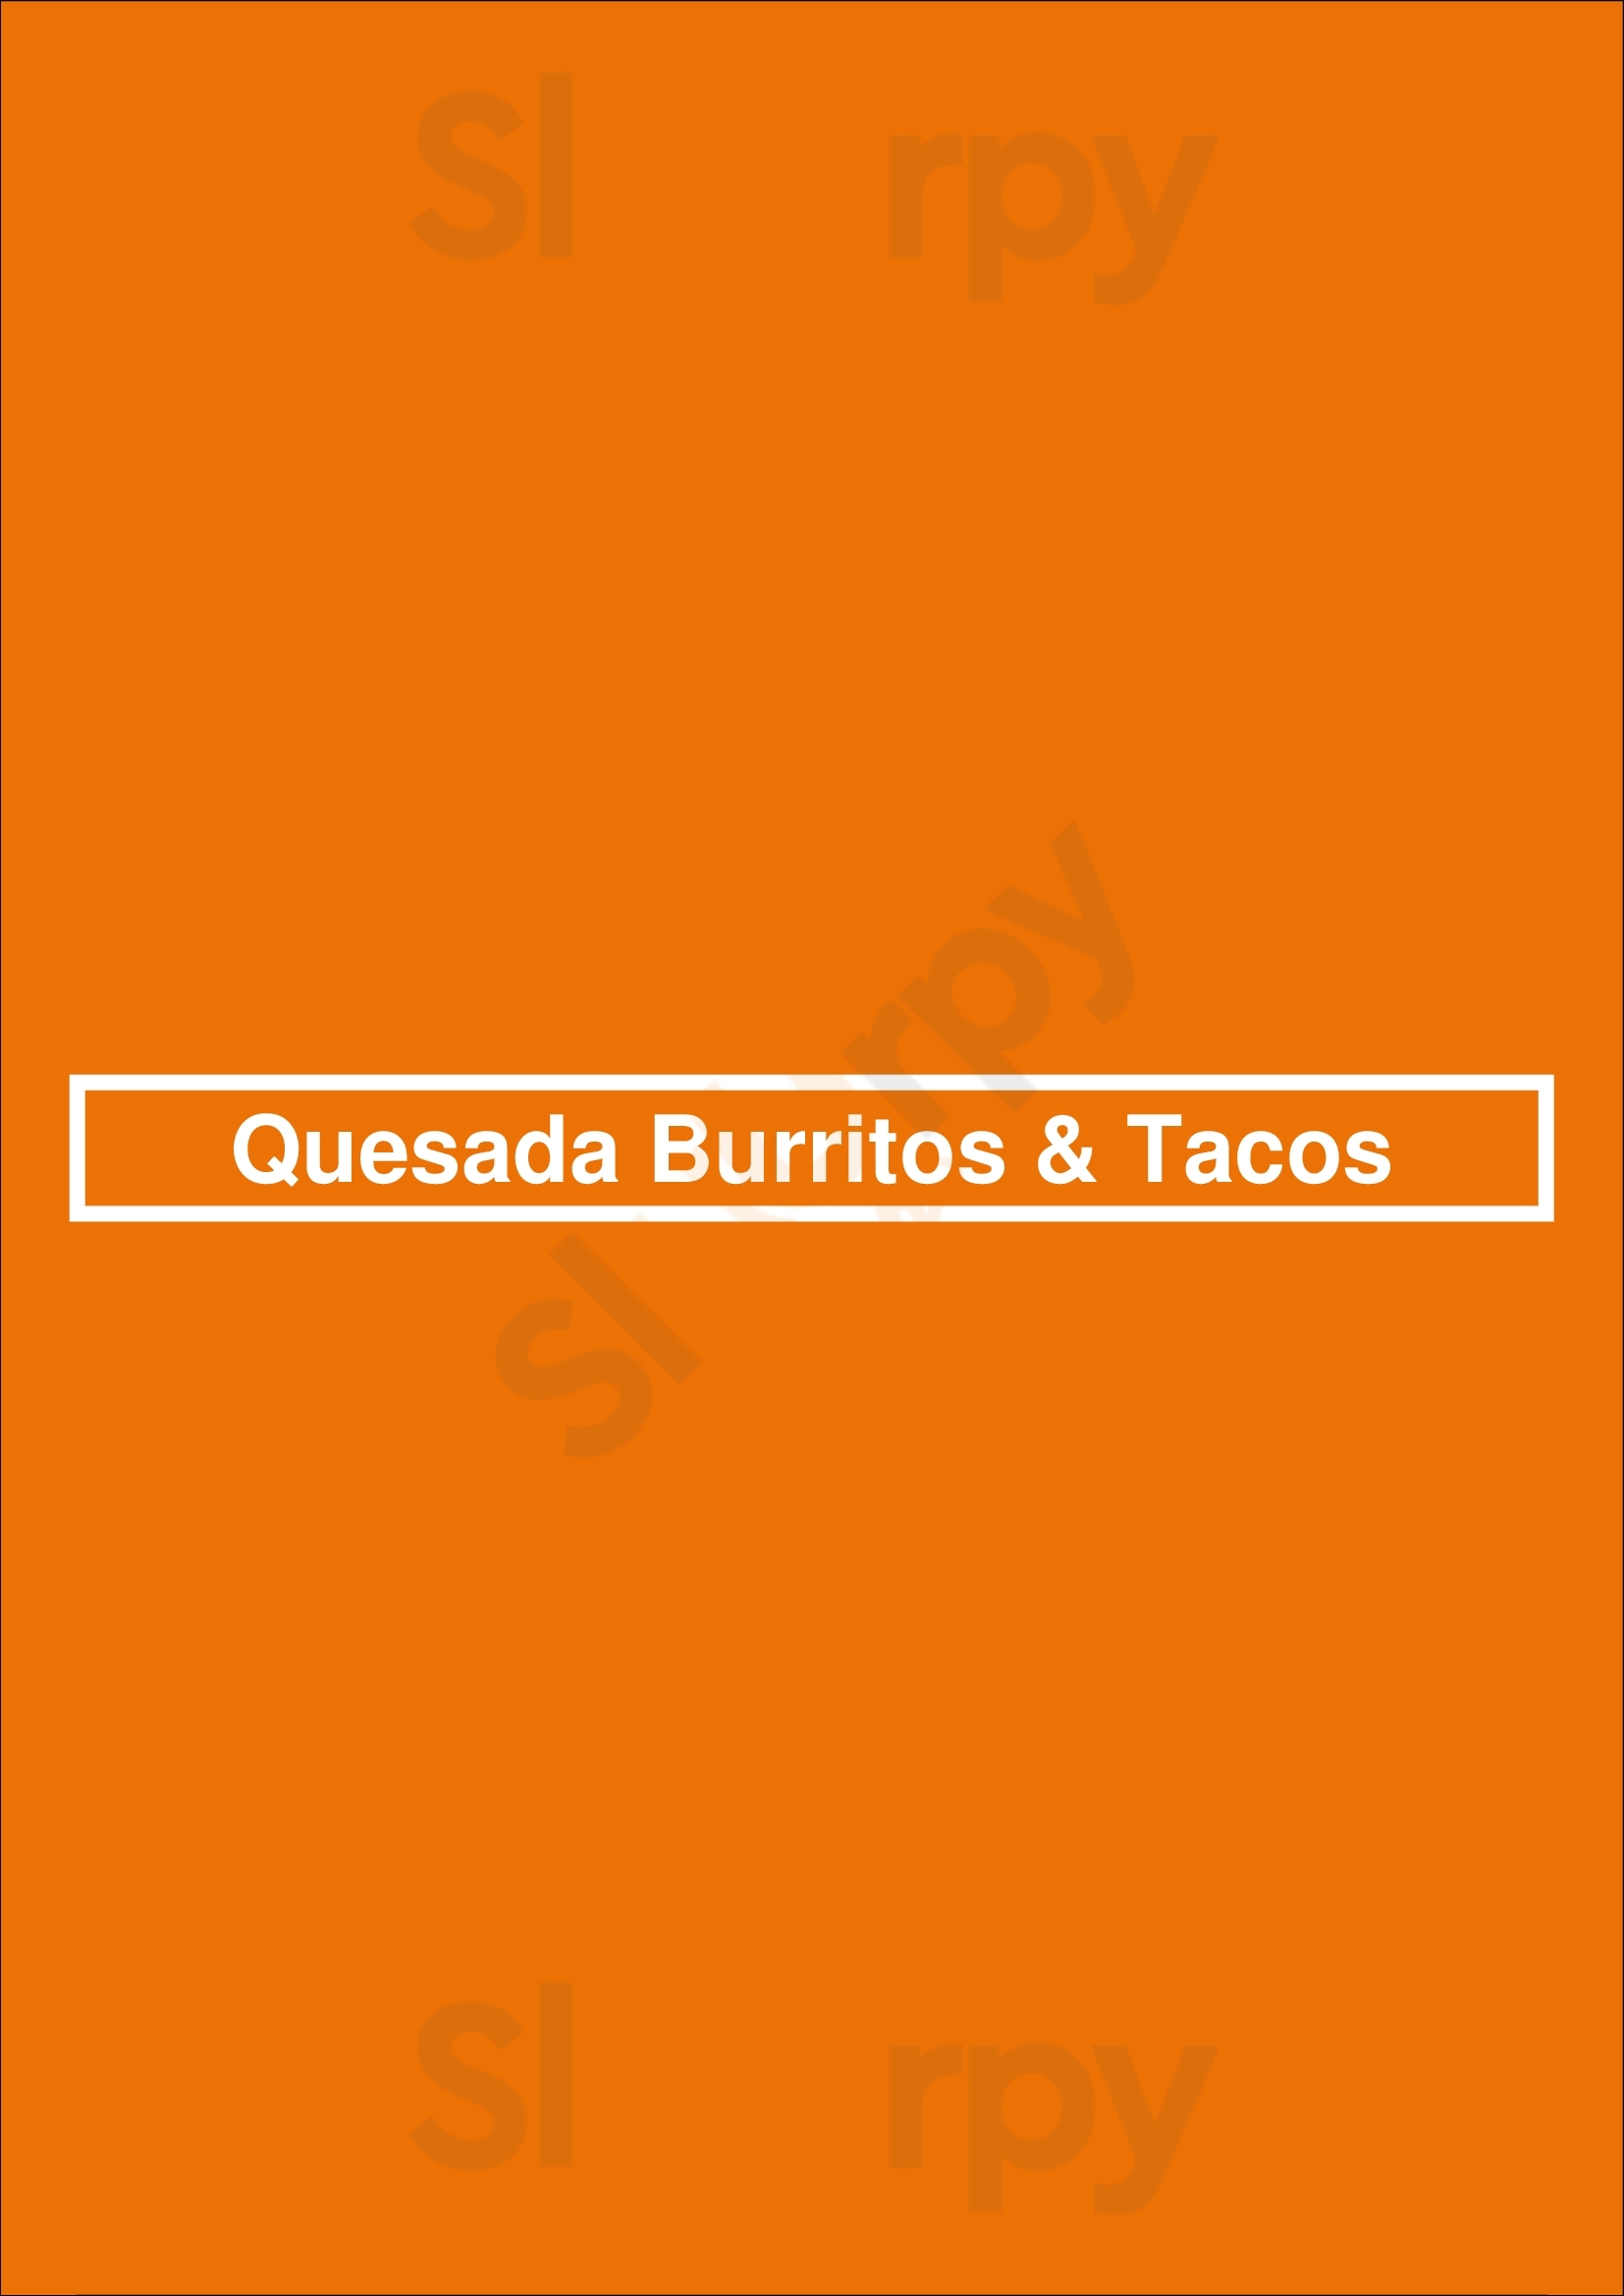 Quesada Burritos & Tacos Surrey Menu - 1